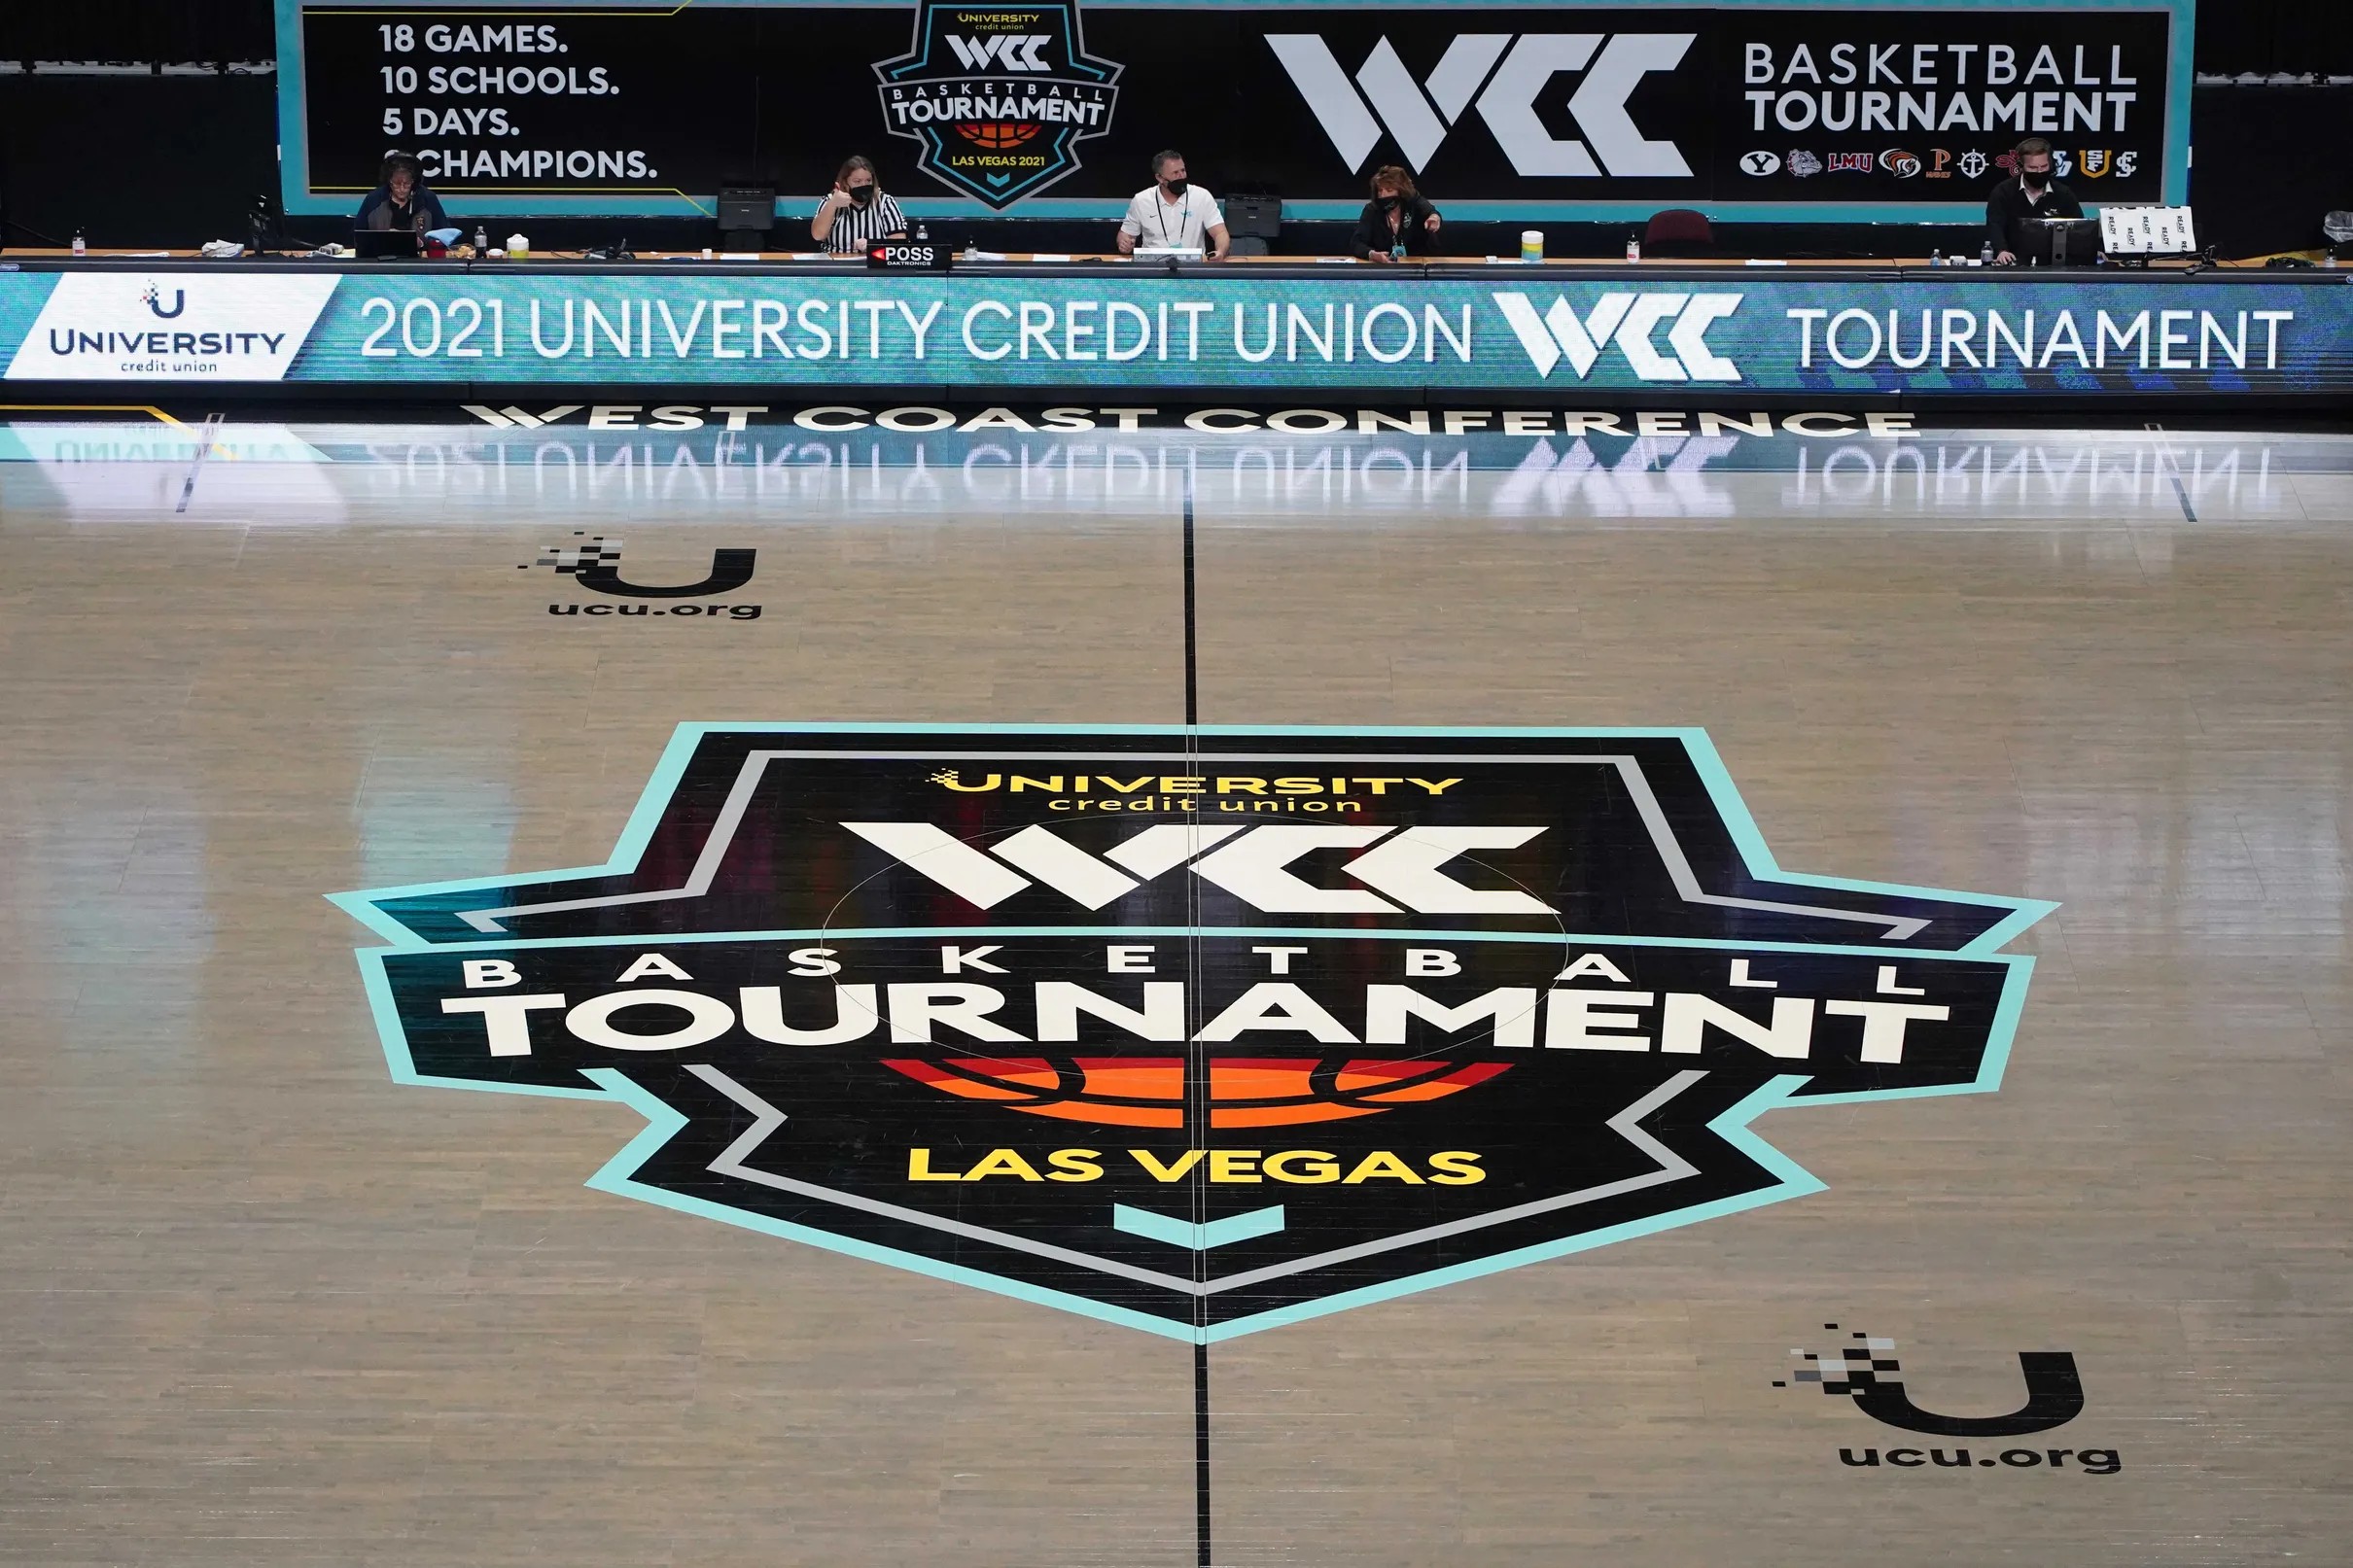 Bracket, TV Times Set for WCC Men’s Basketball Tournament